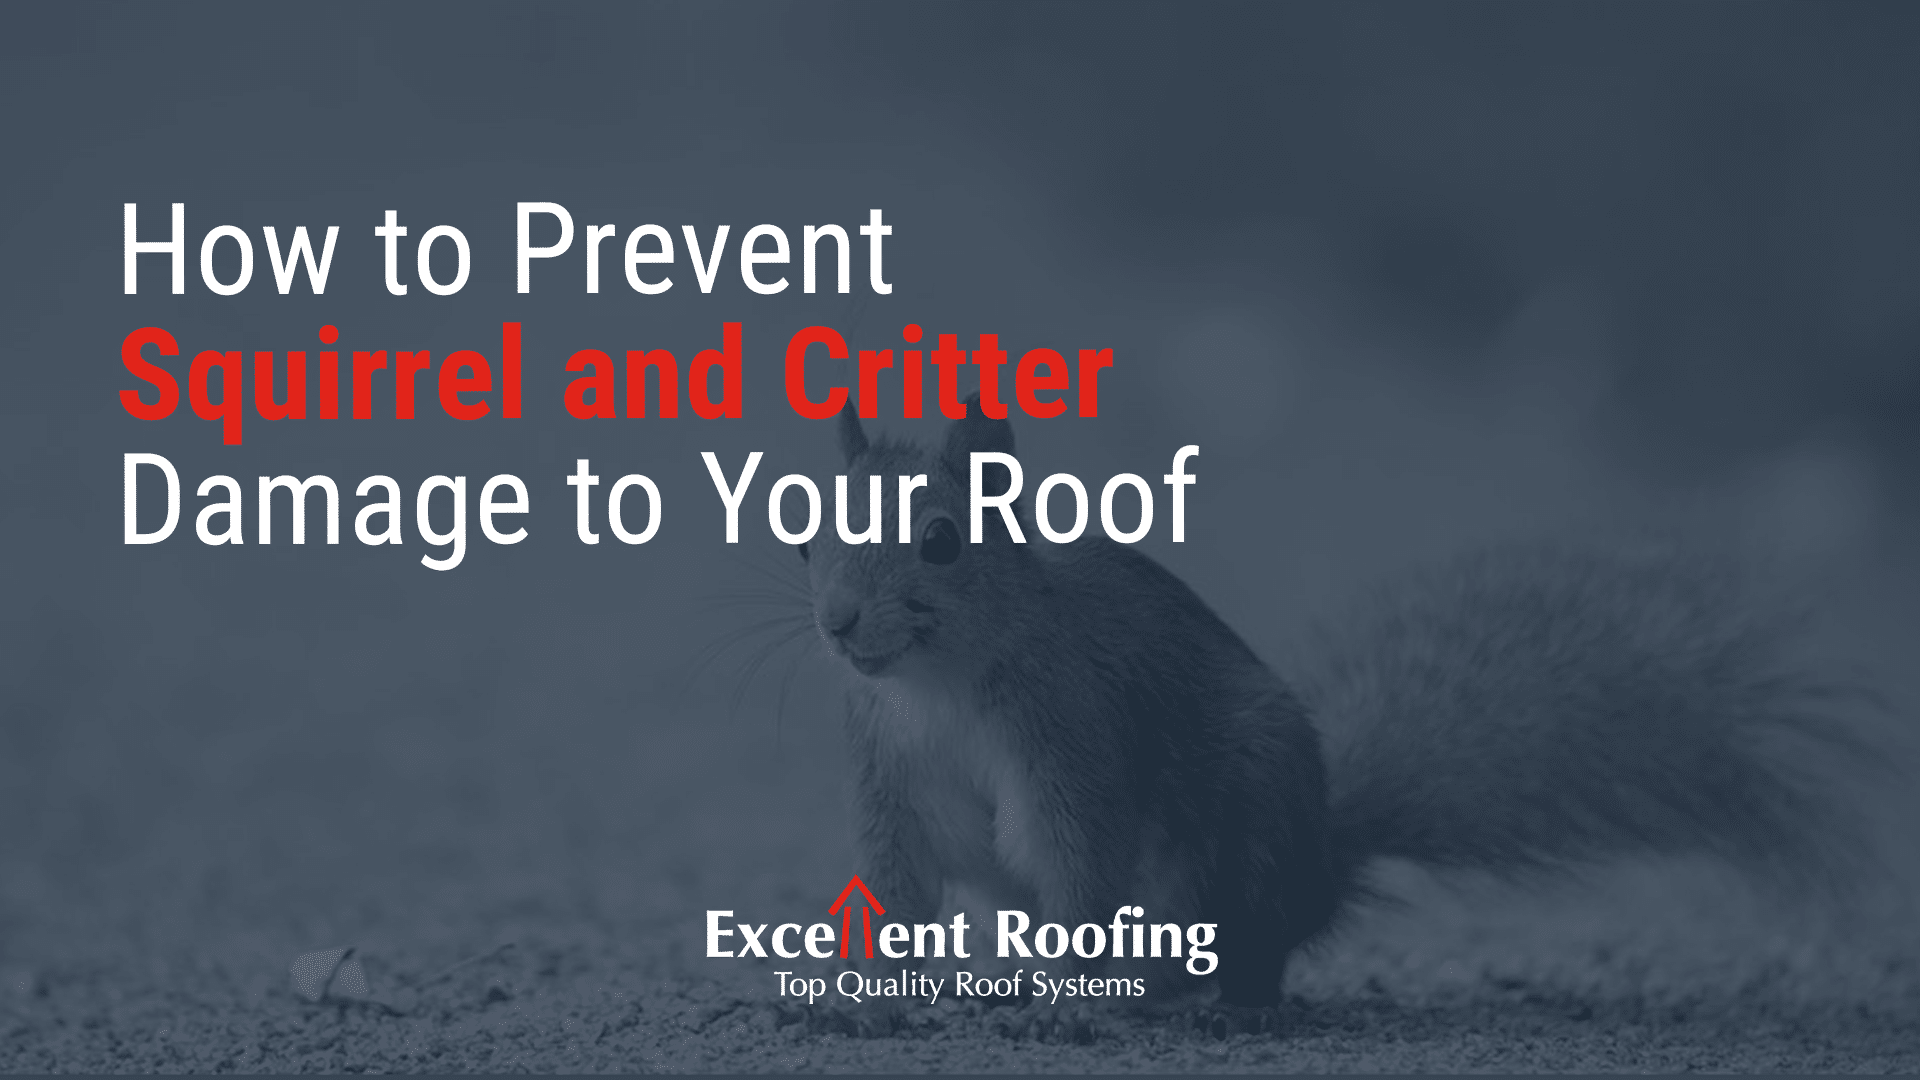 https://excellentroofing.com/wp-content/uploads/2020/03/squirrel-critter-roof-damage.png